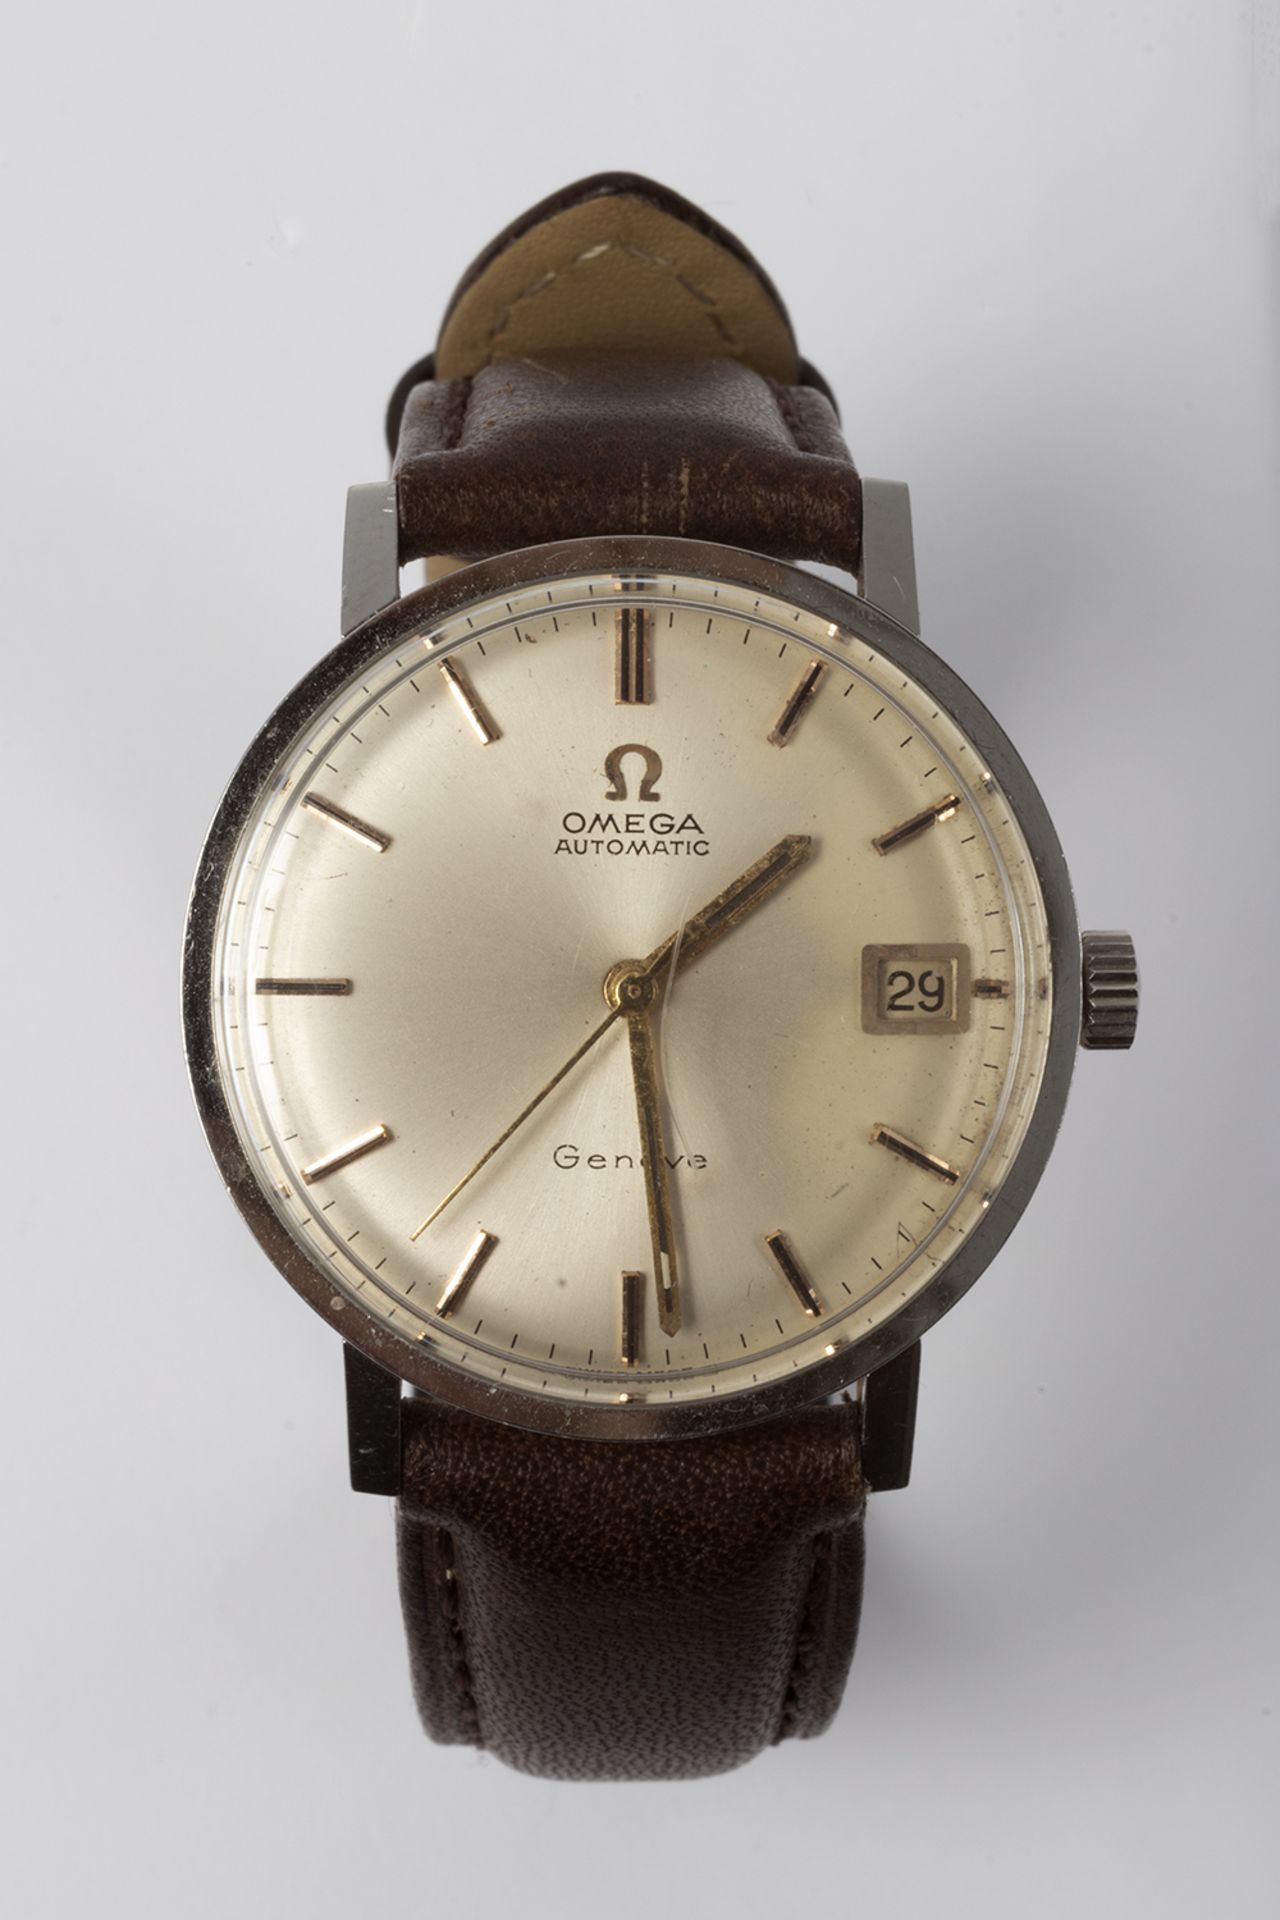 Omega men's wristwatch.